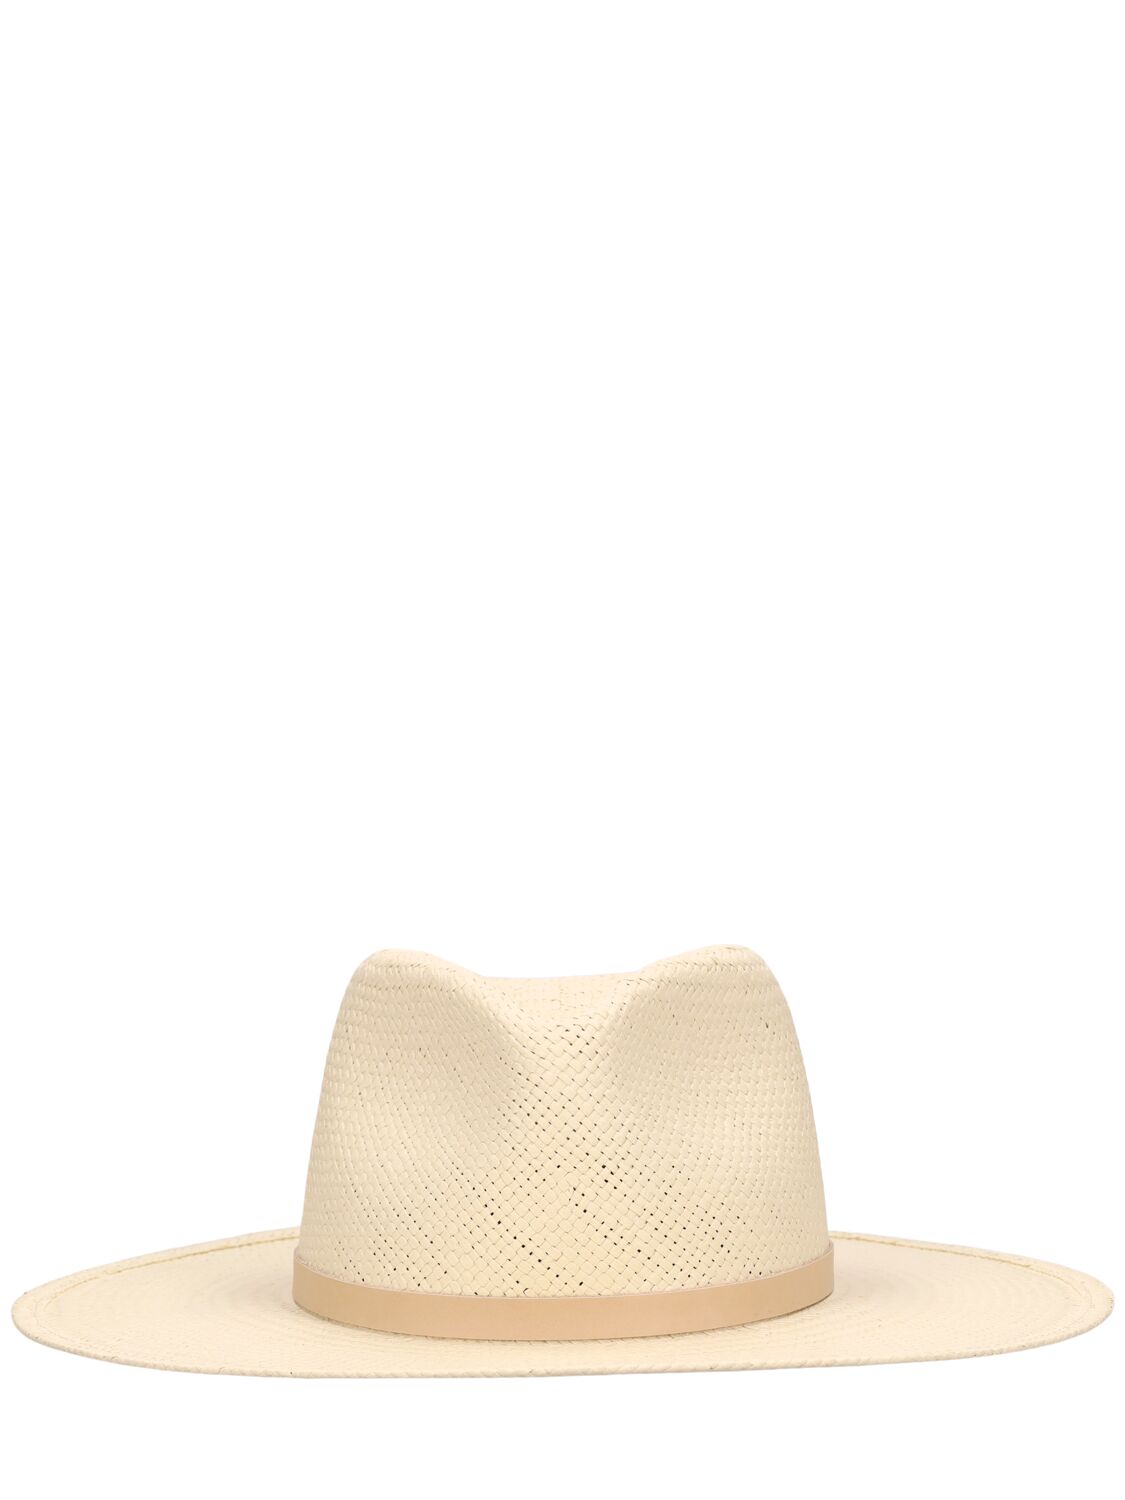 Janessa Leone Sherman Straw Hat In Natural